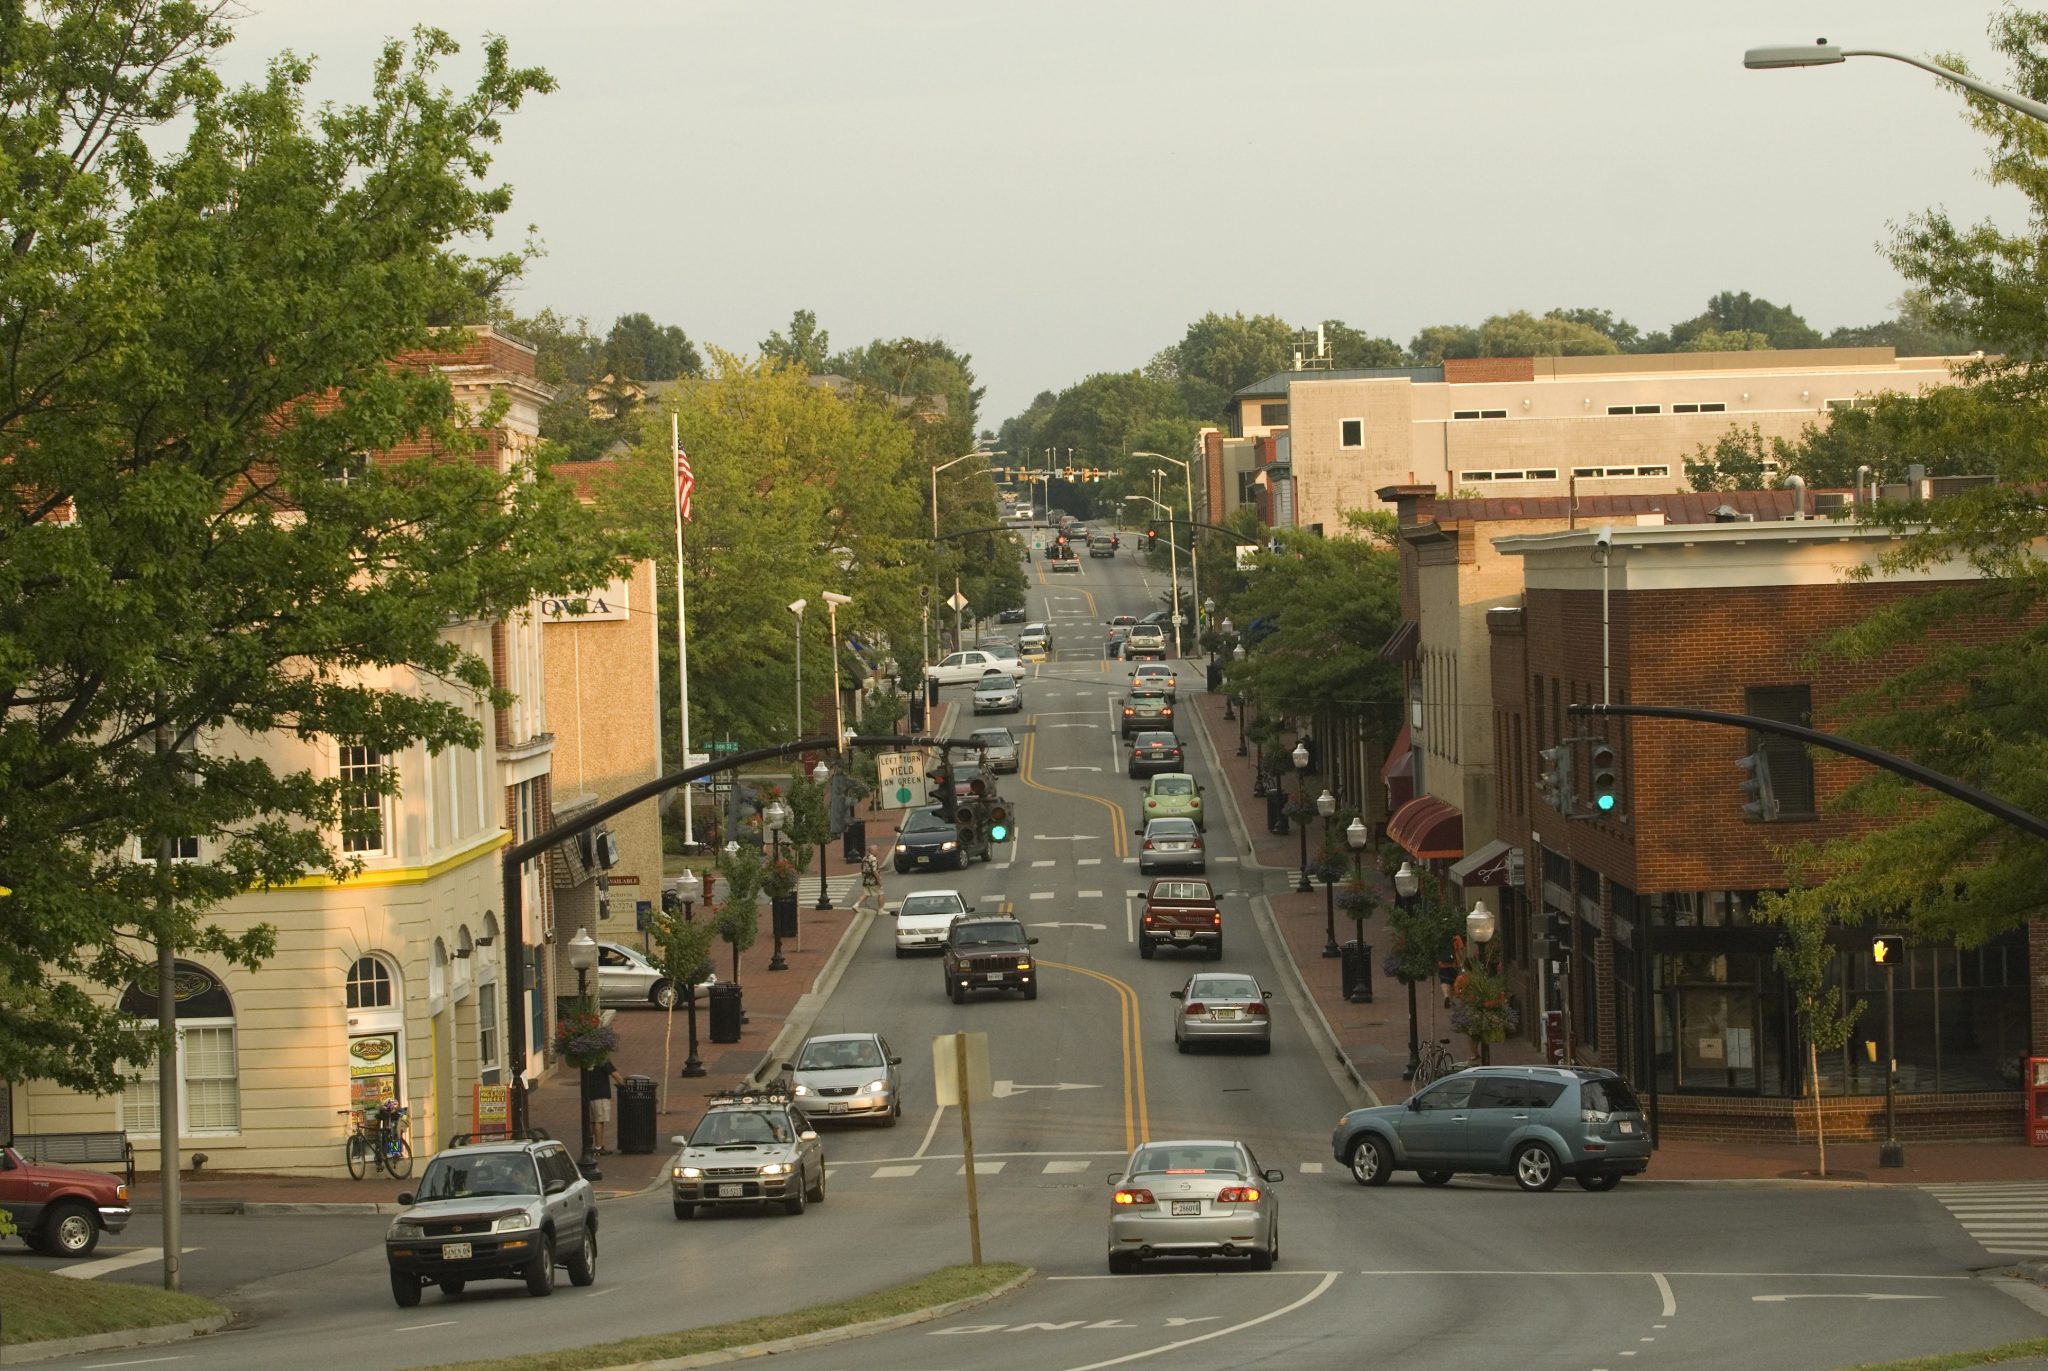 Looking down main street in downtown Blacksburg in Montgomery County, VA